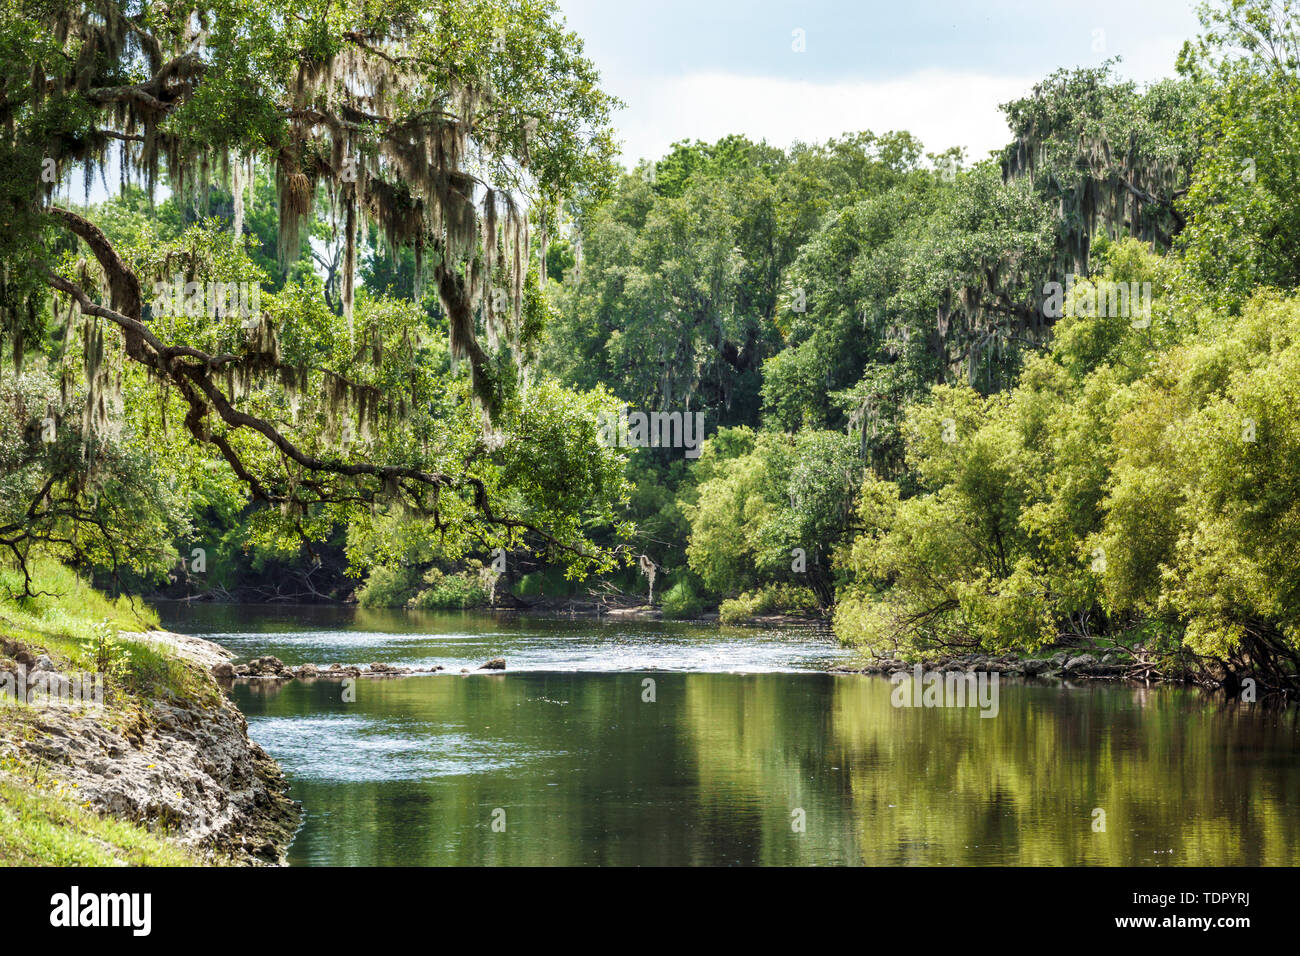 Florida,Zolfo Springs,Peace River,Hardee County Wildlife Refuge,riverbanks,trees,vegetation,calm water,Spanish moss,FL190510038 Stock Photo